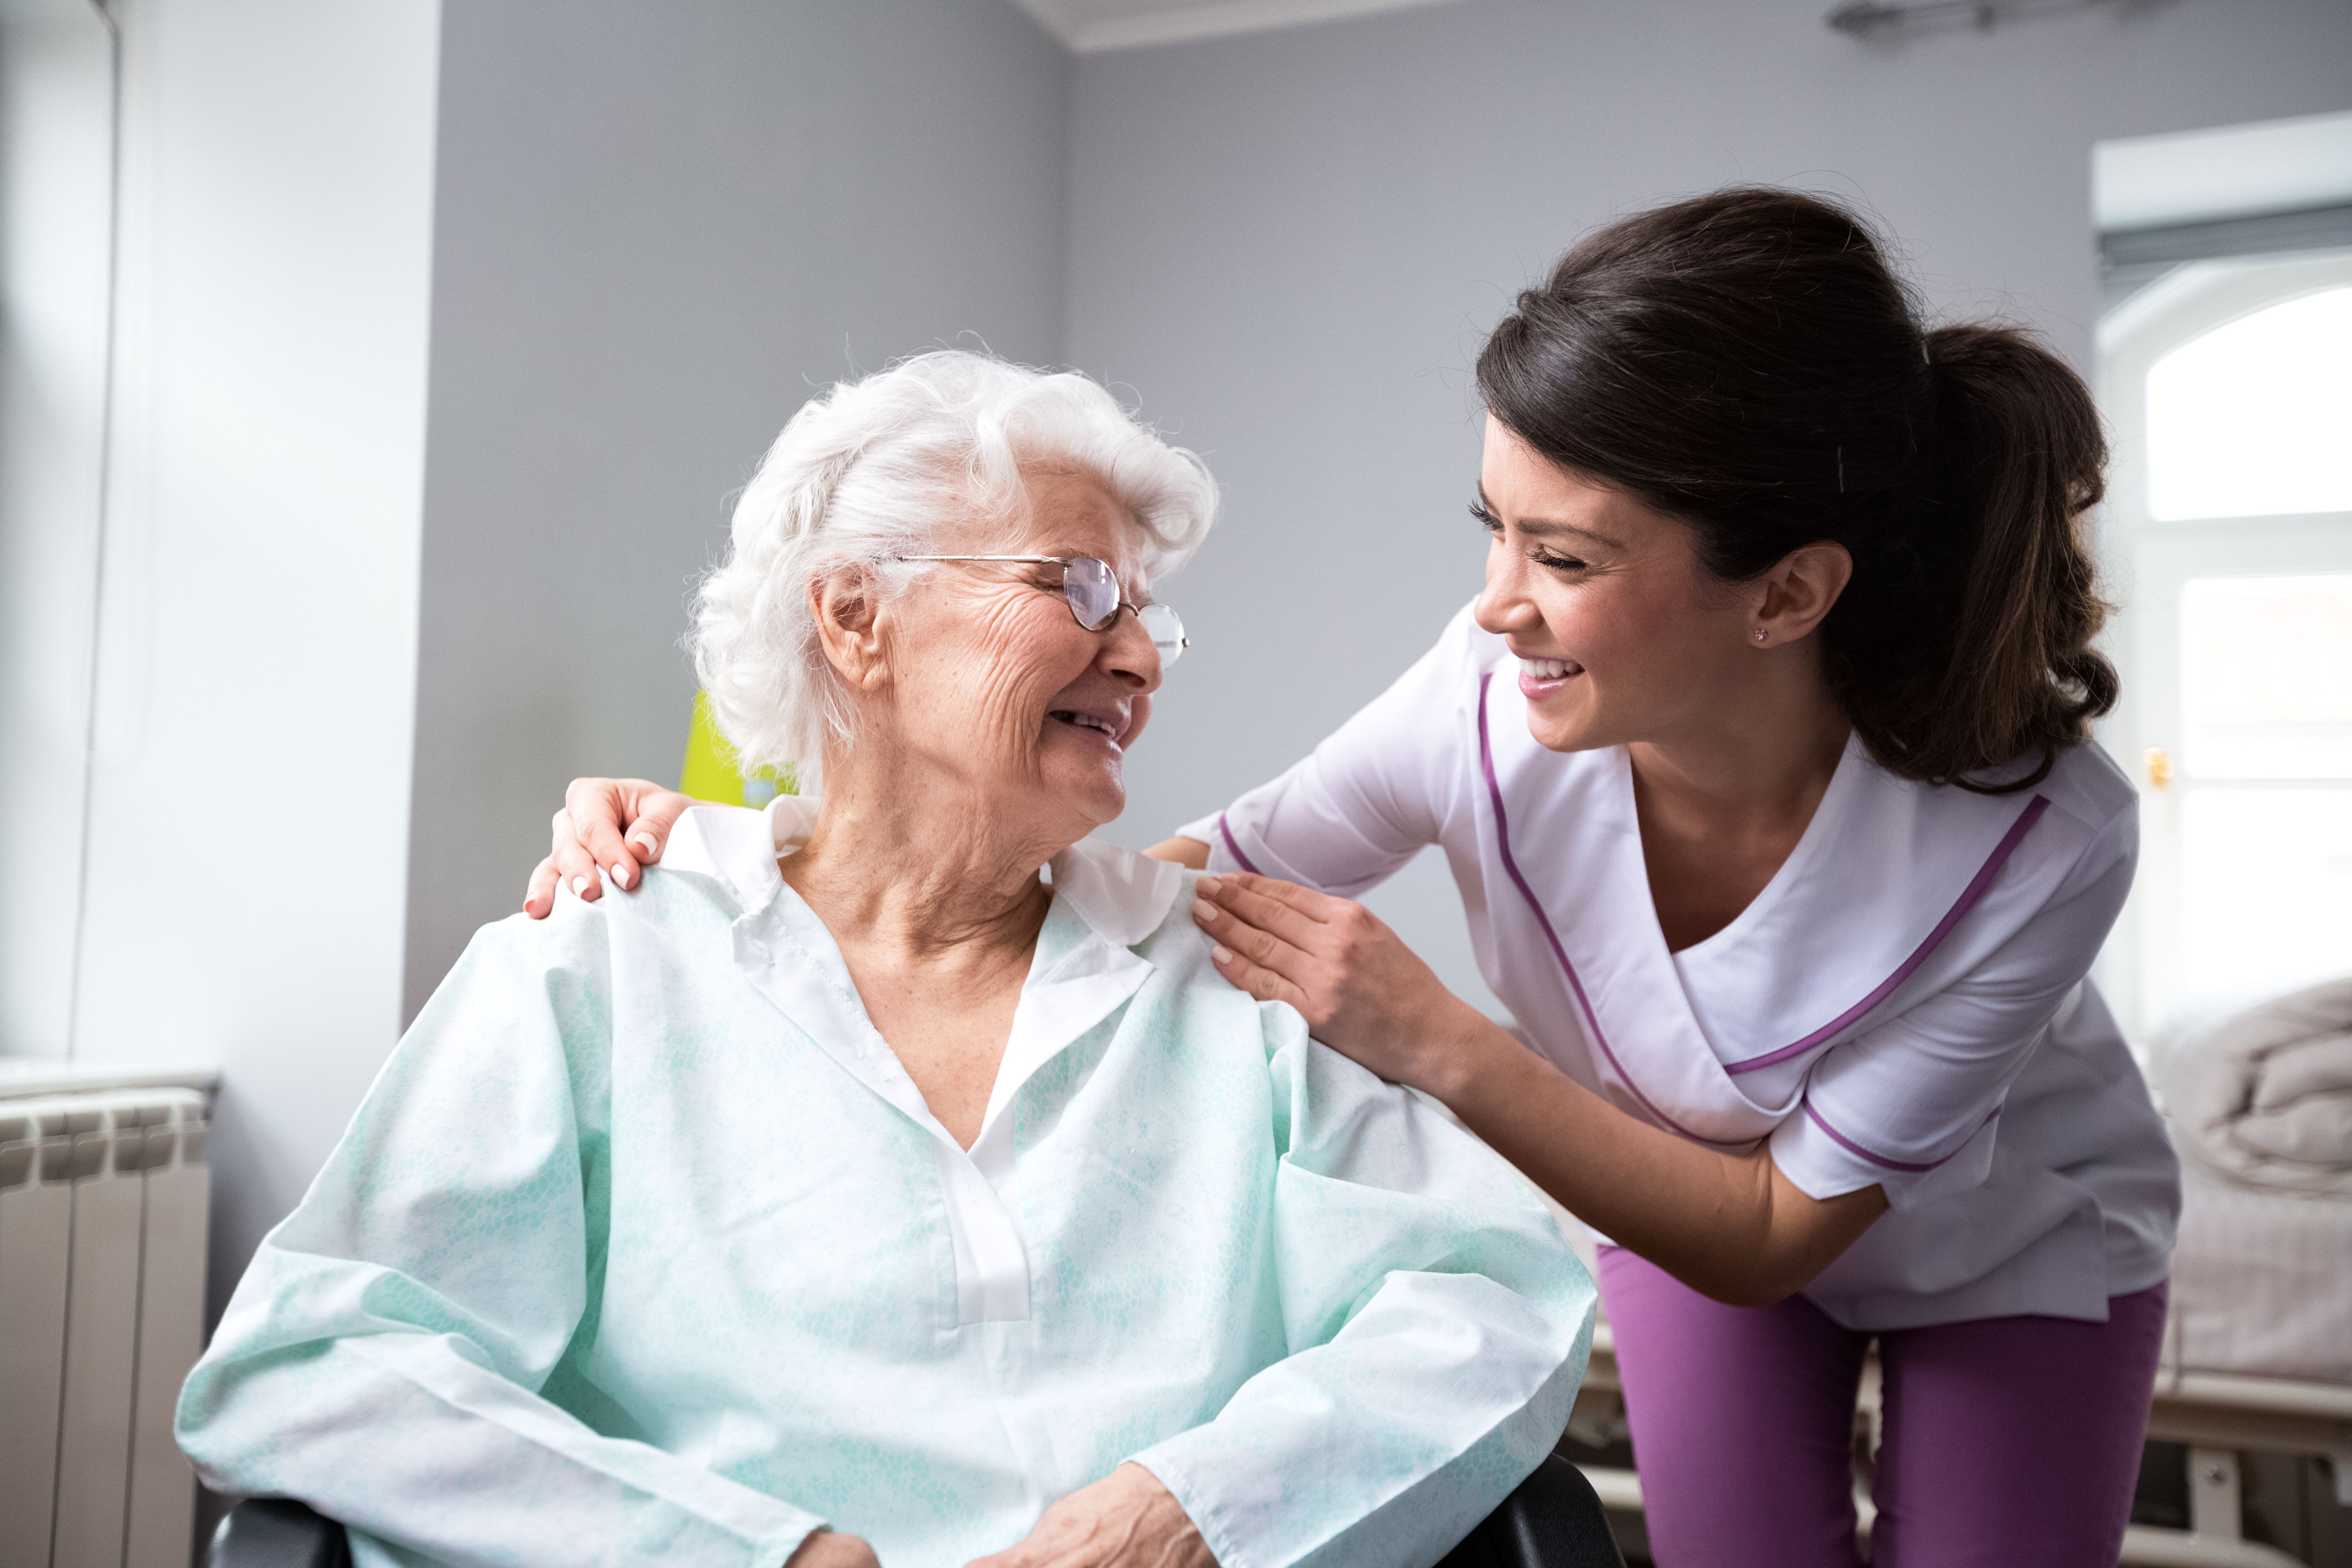 Older patient with nurse | Image credit: didesign ? stock.adobe.com